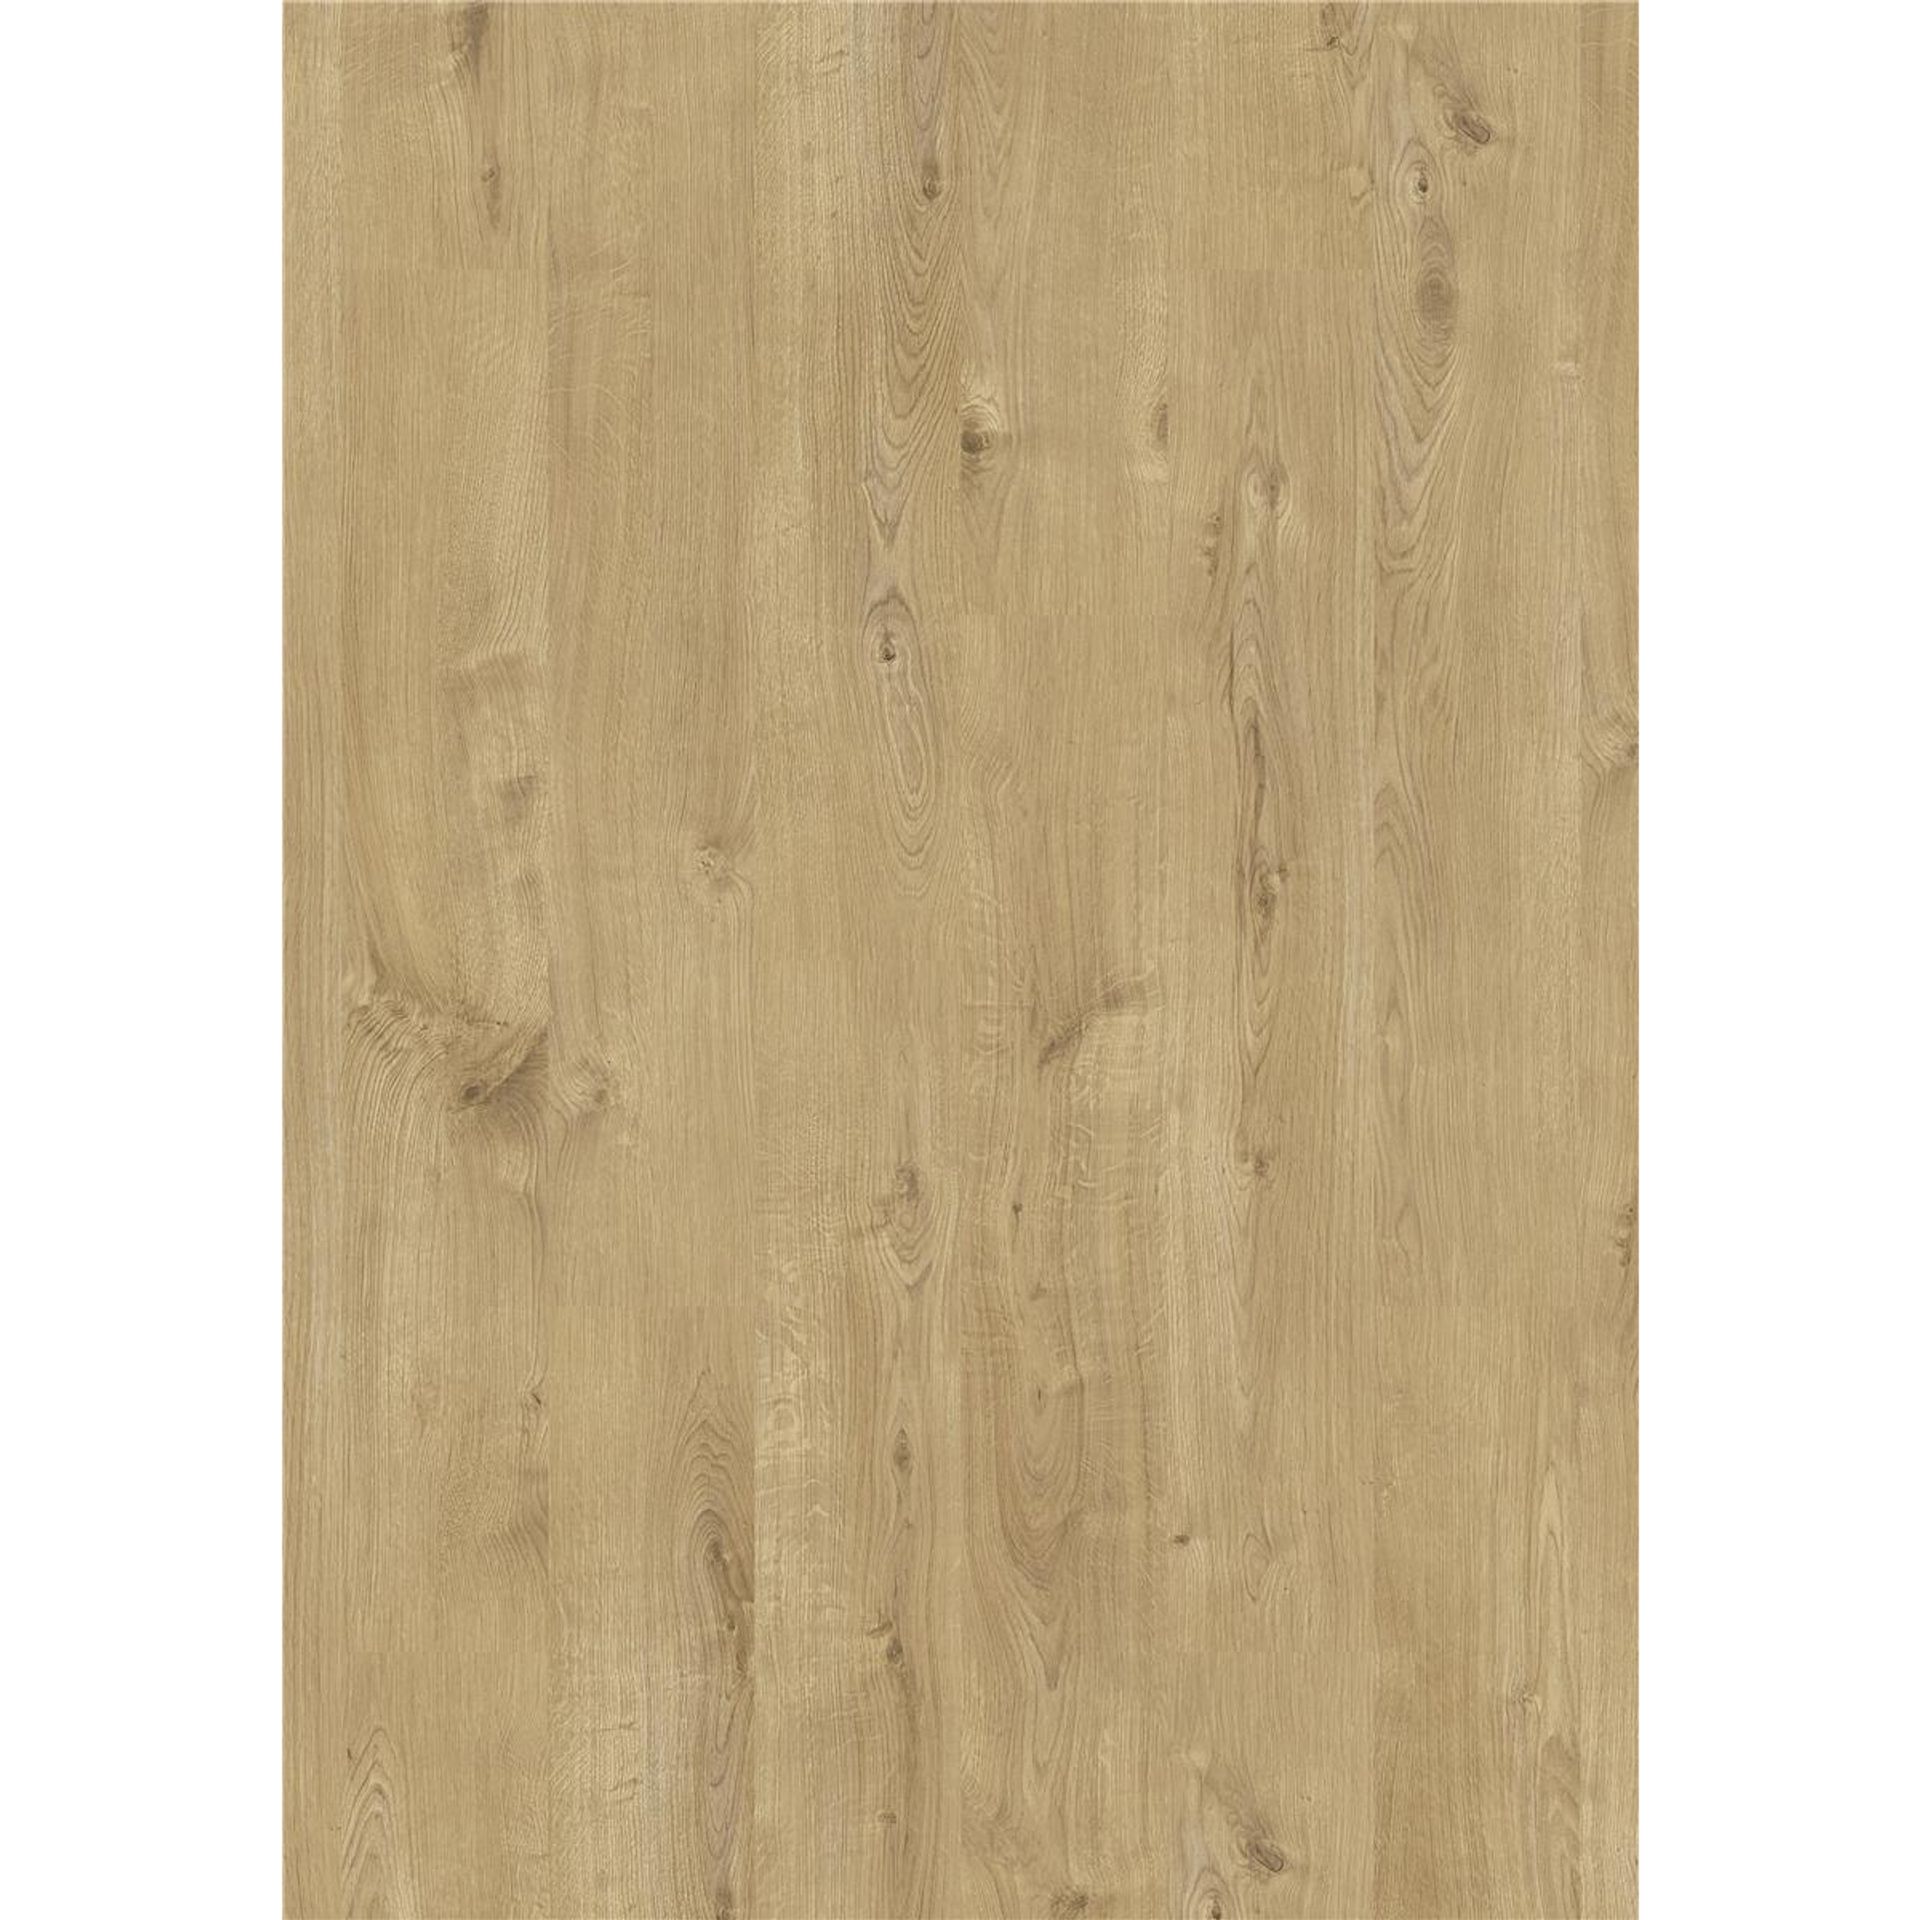 Laminat Planke 19,2 cm x 128,5 cm Klassik 1-Stab AS Oak timeless - 7 mm Stärke